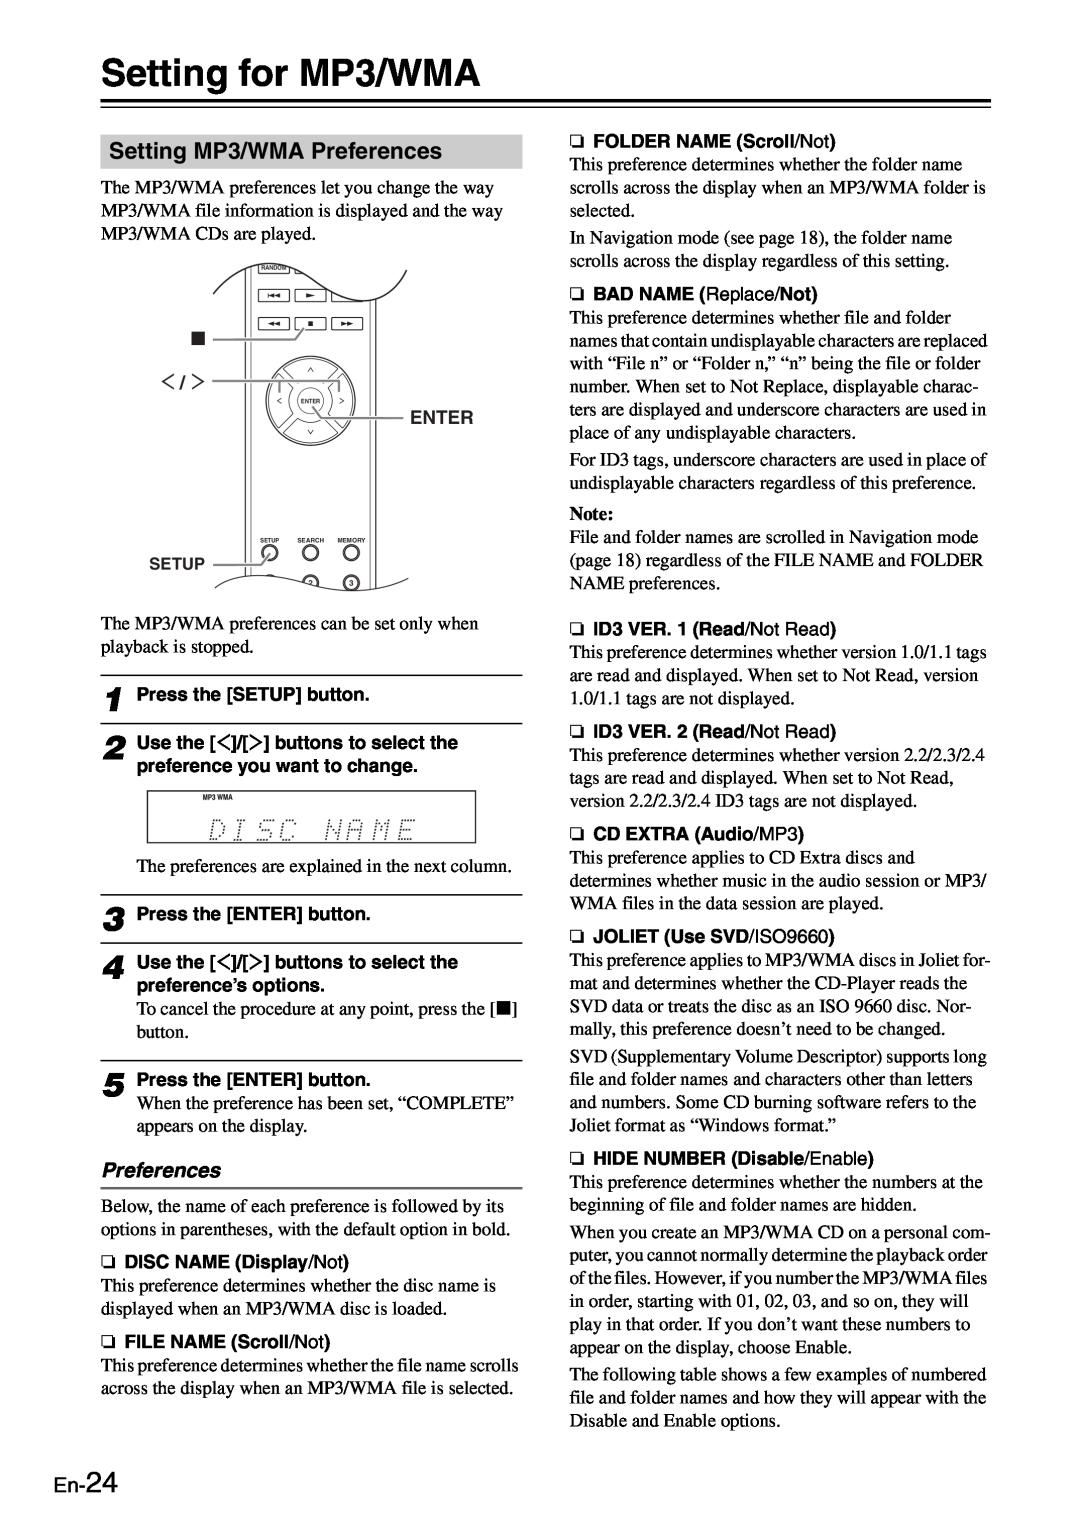 Onkyo C-7030 instruction manual Setting for MP3/WMA, Setting MP3/WMA Preferences, En-24 